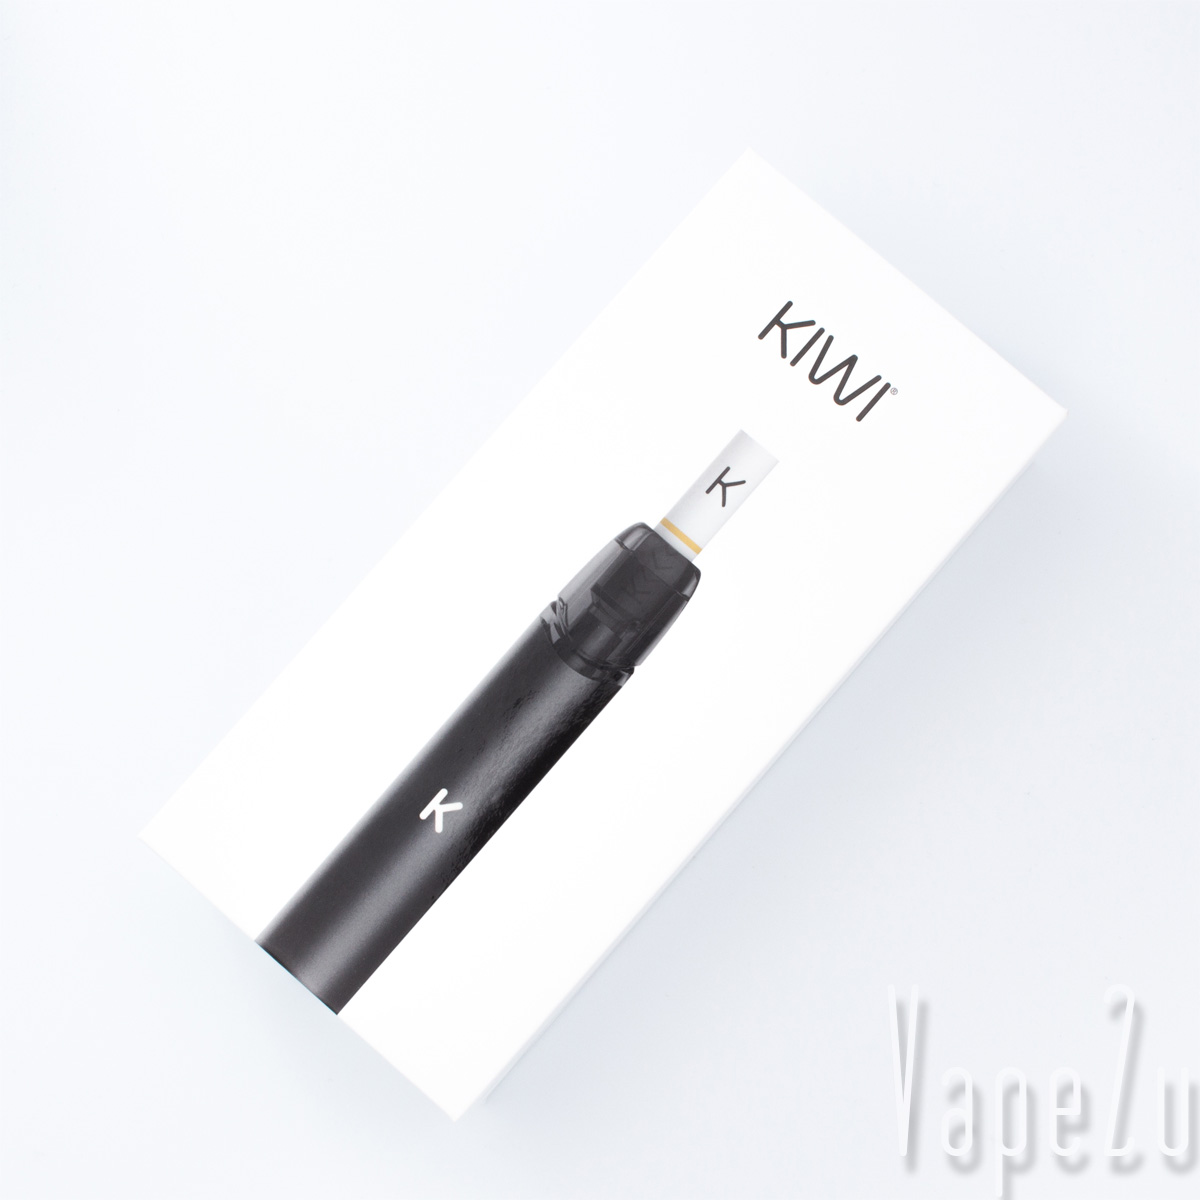 KIWI Pen Pod レビュー - Vape2u